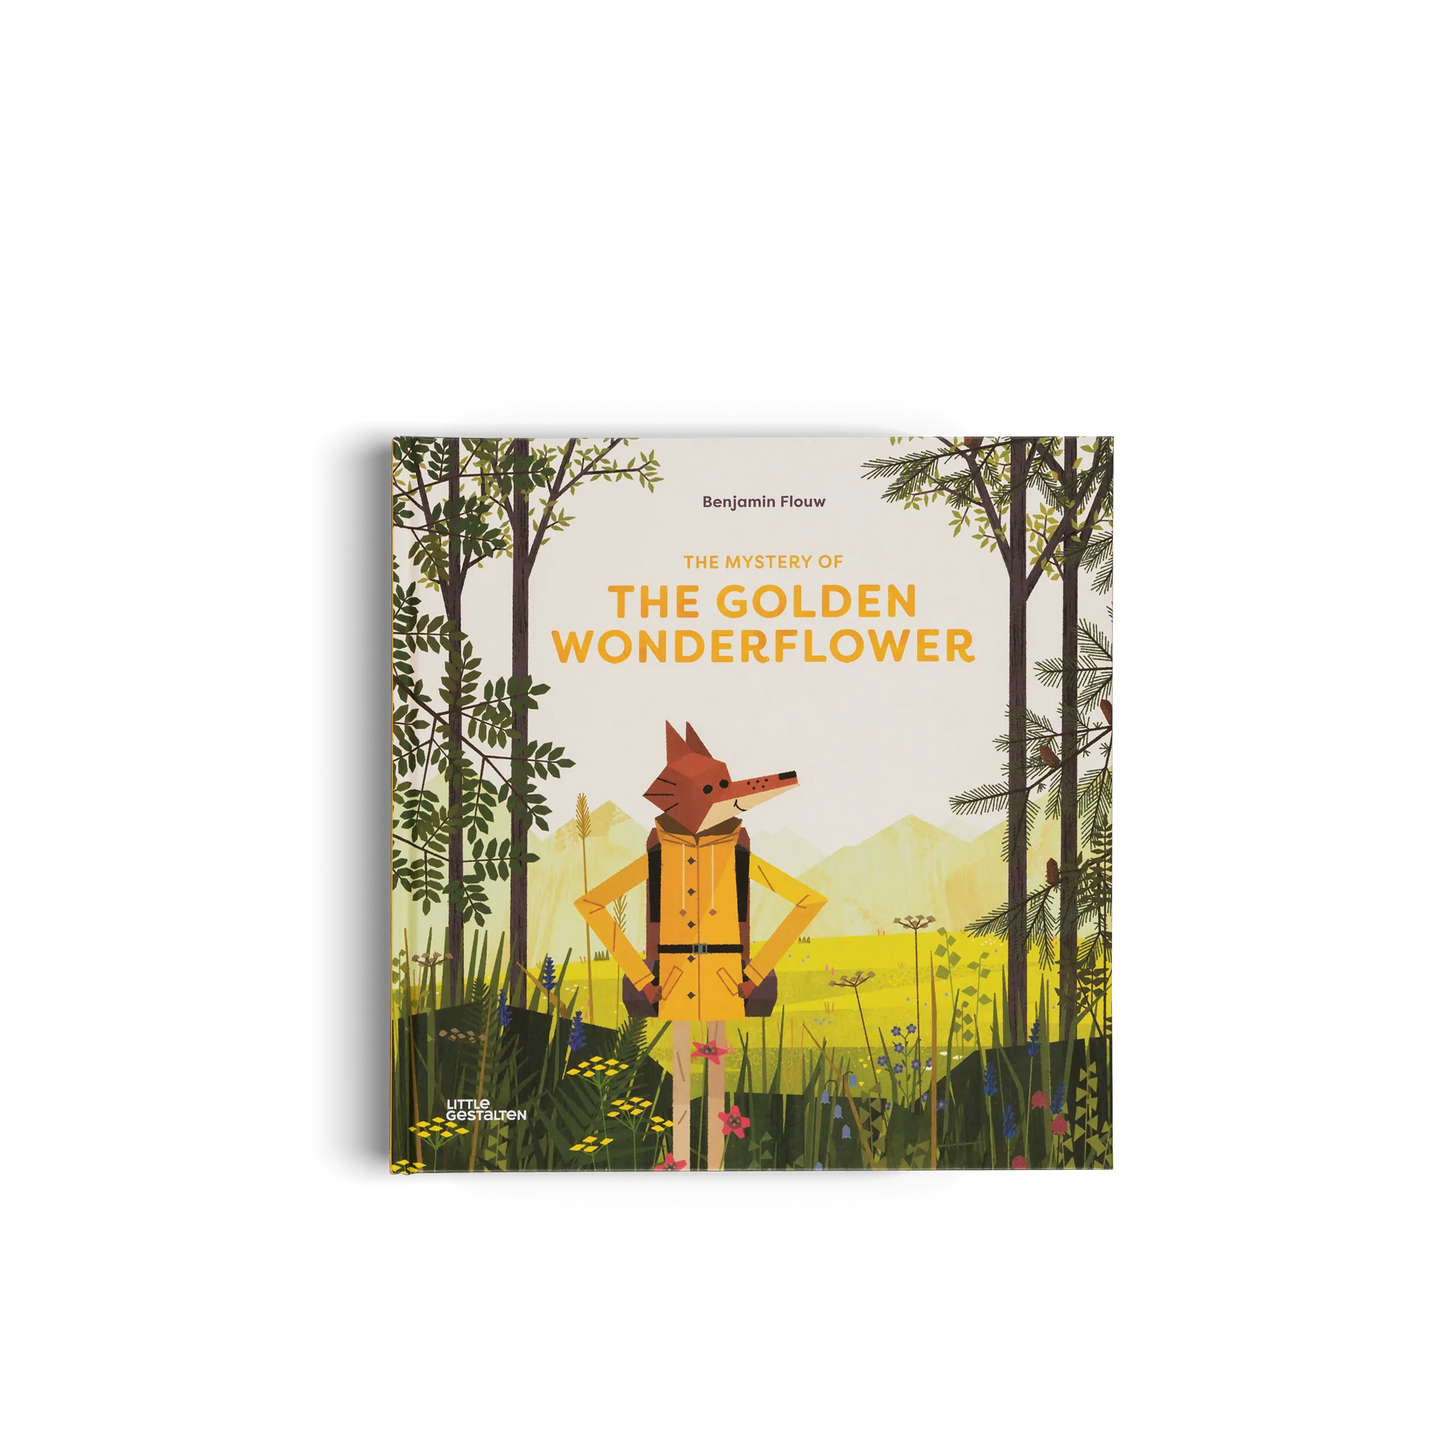 the mystery of the golden wonderflower - by benjamin flouw